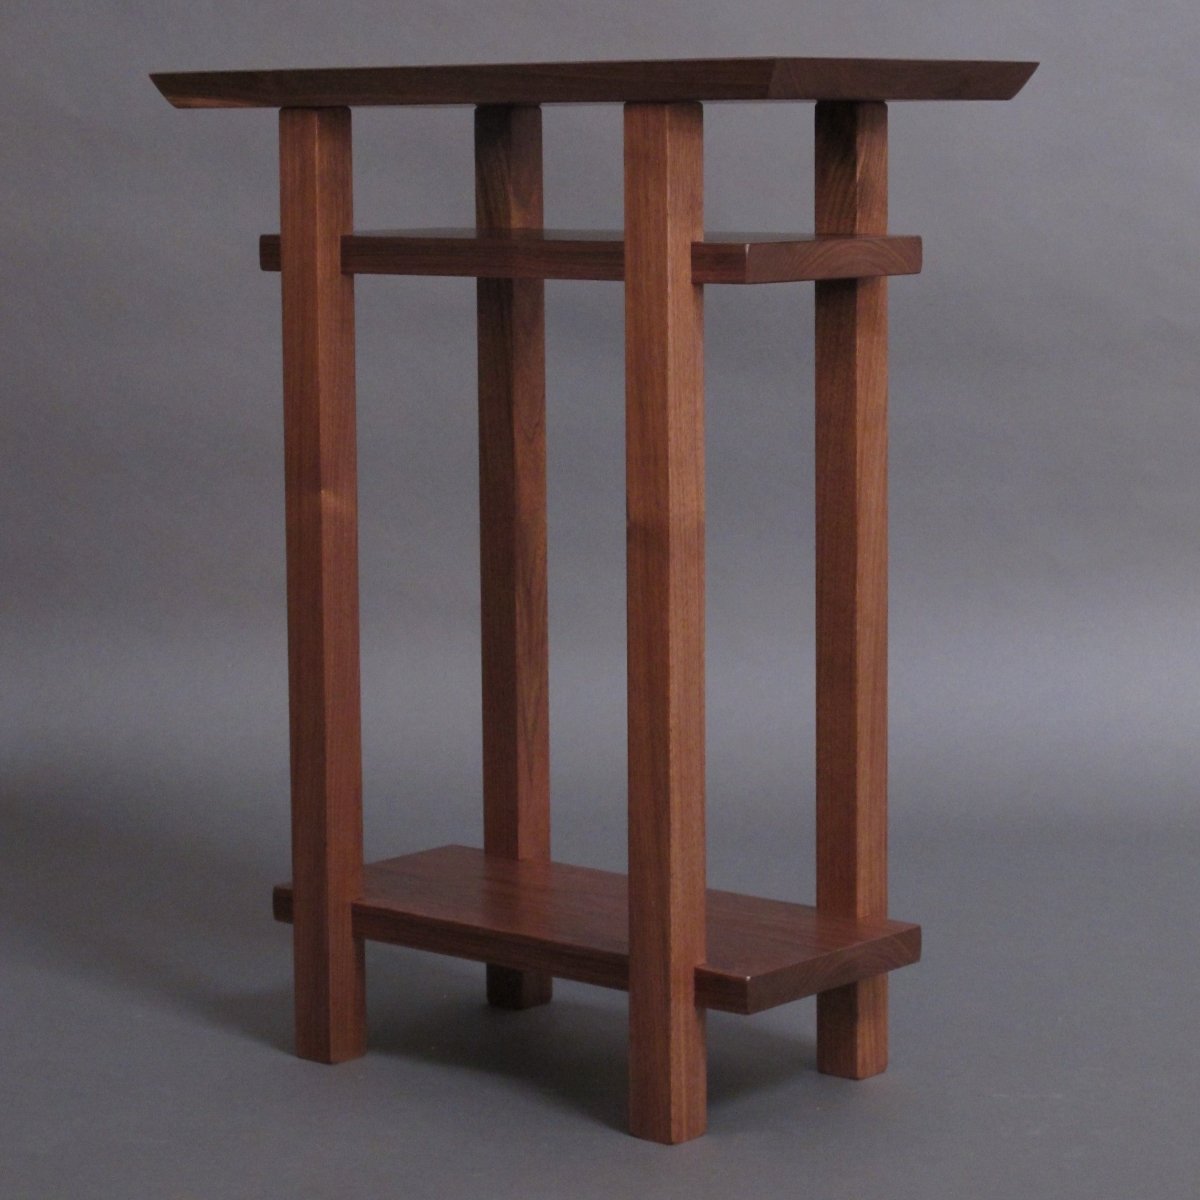 A mid century modern end table design by Mokuzai Furniture